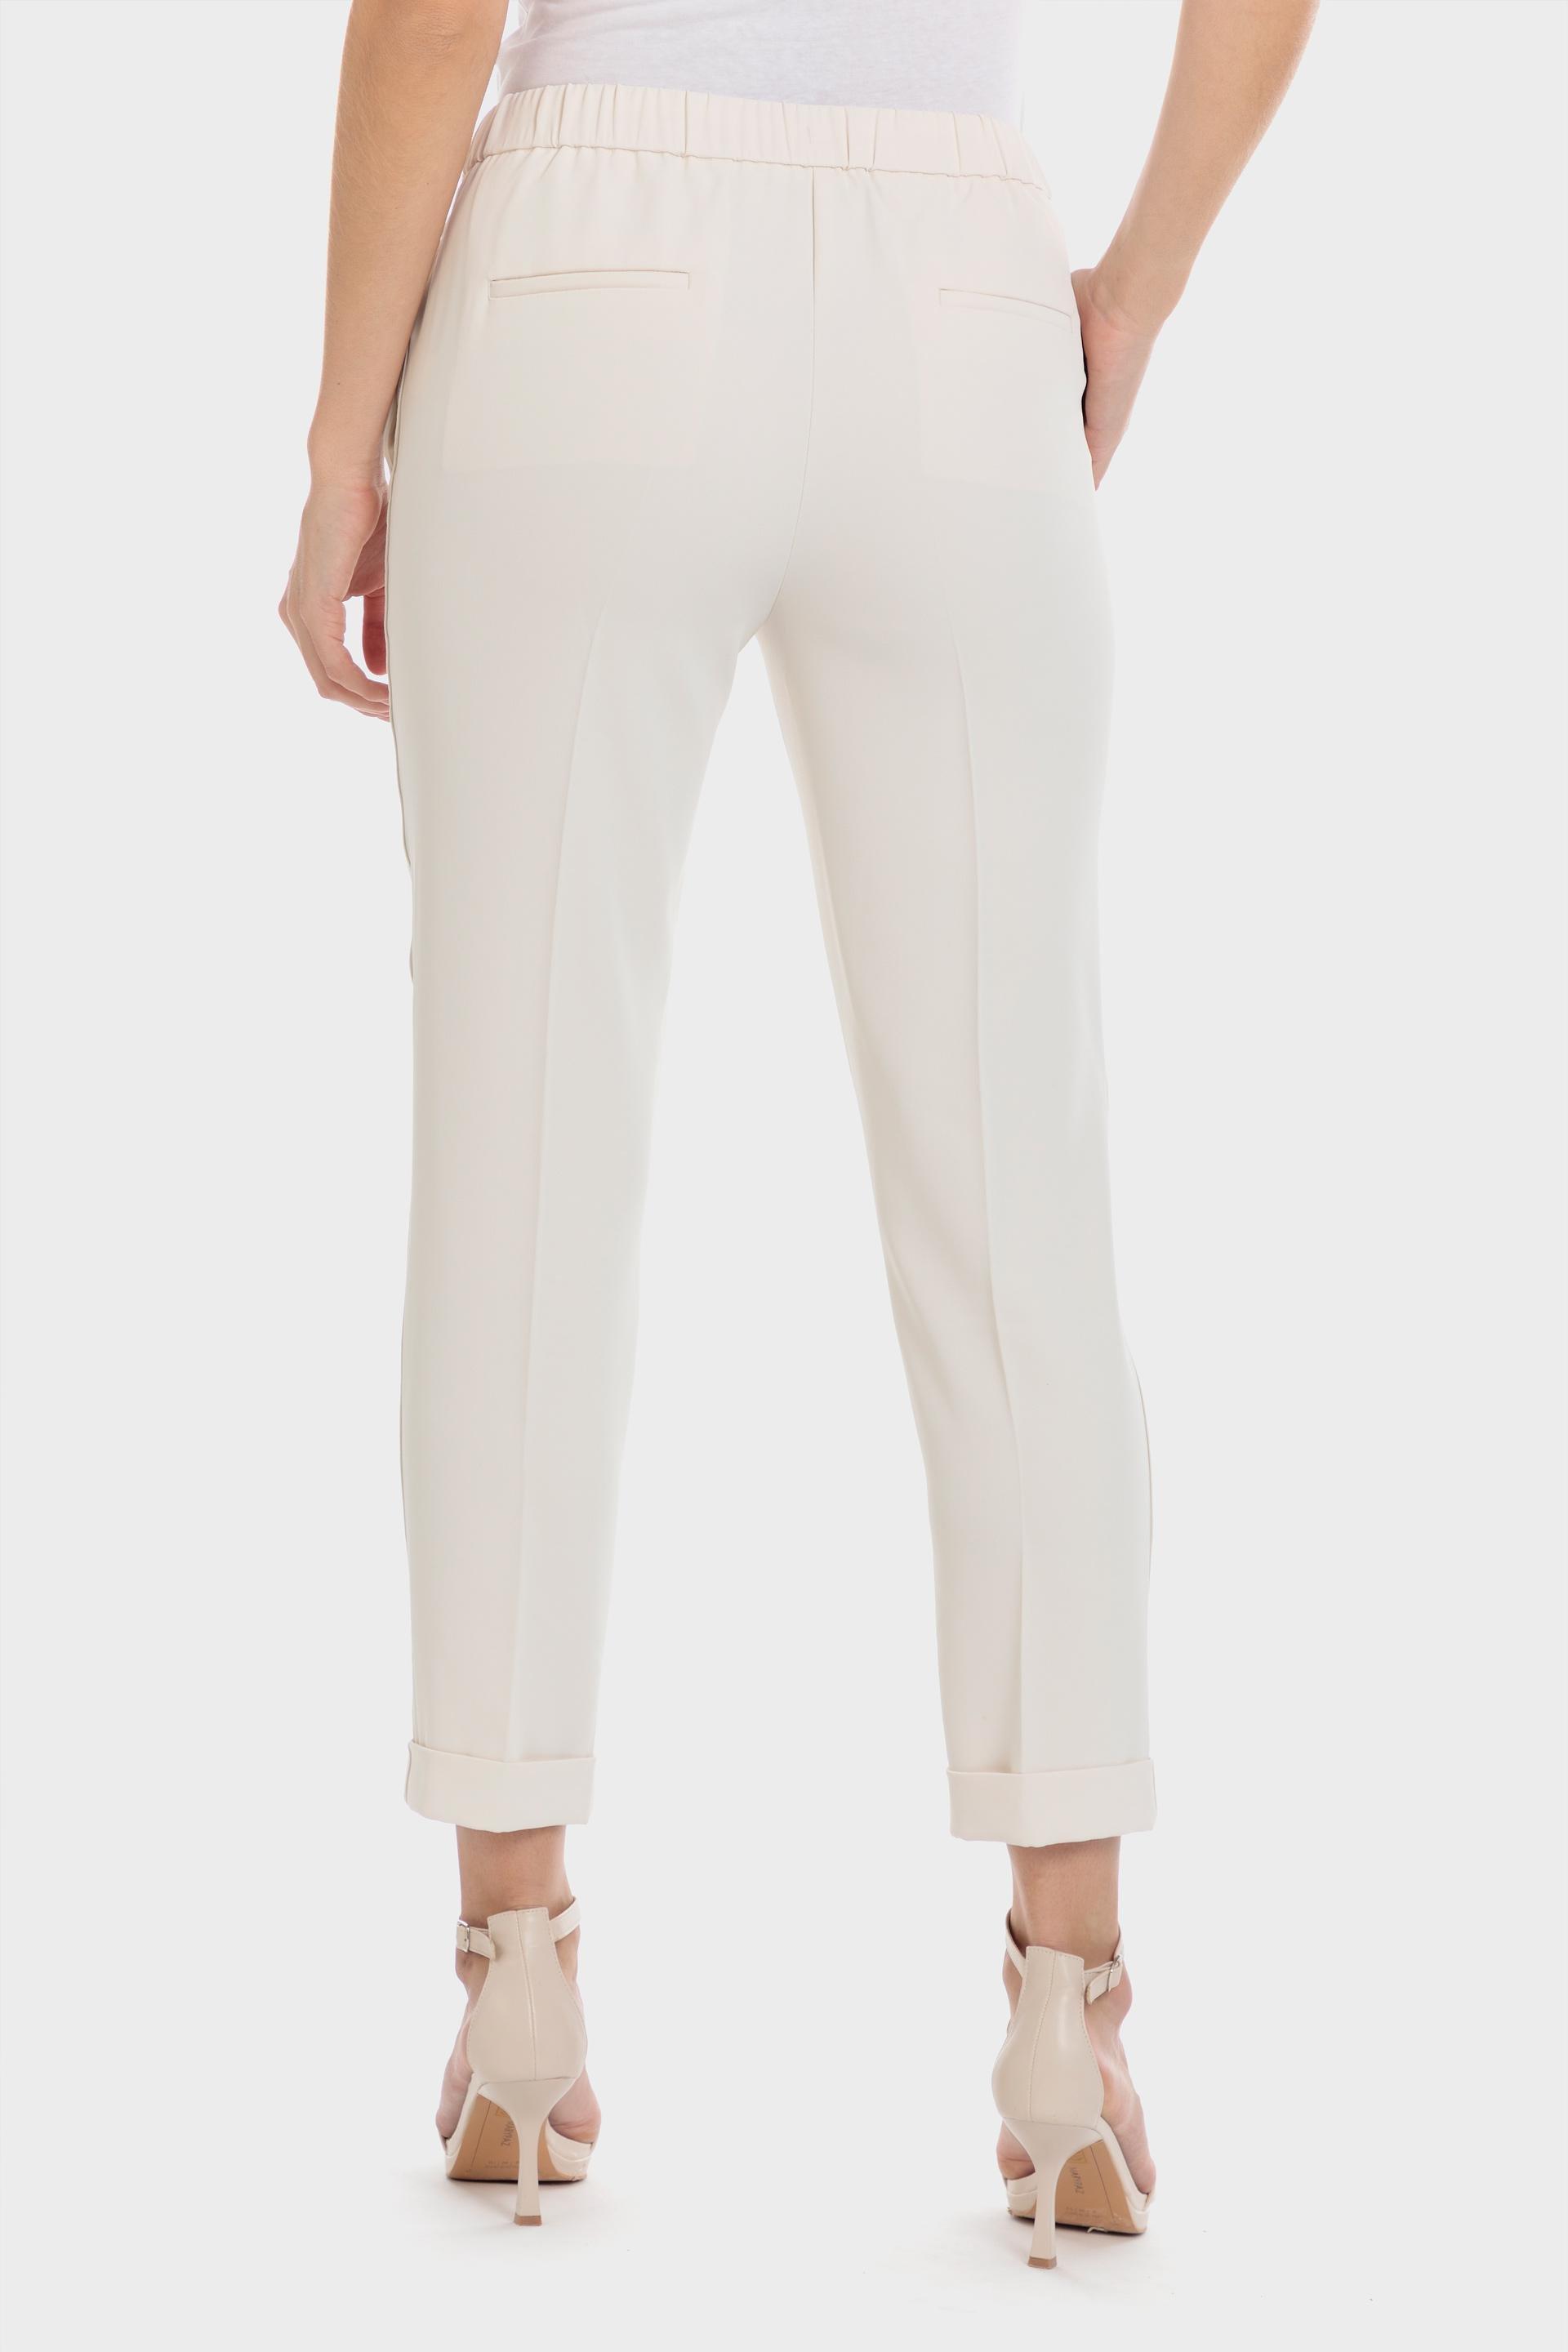 Punt Roma - White Long Crepe Trousers